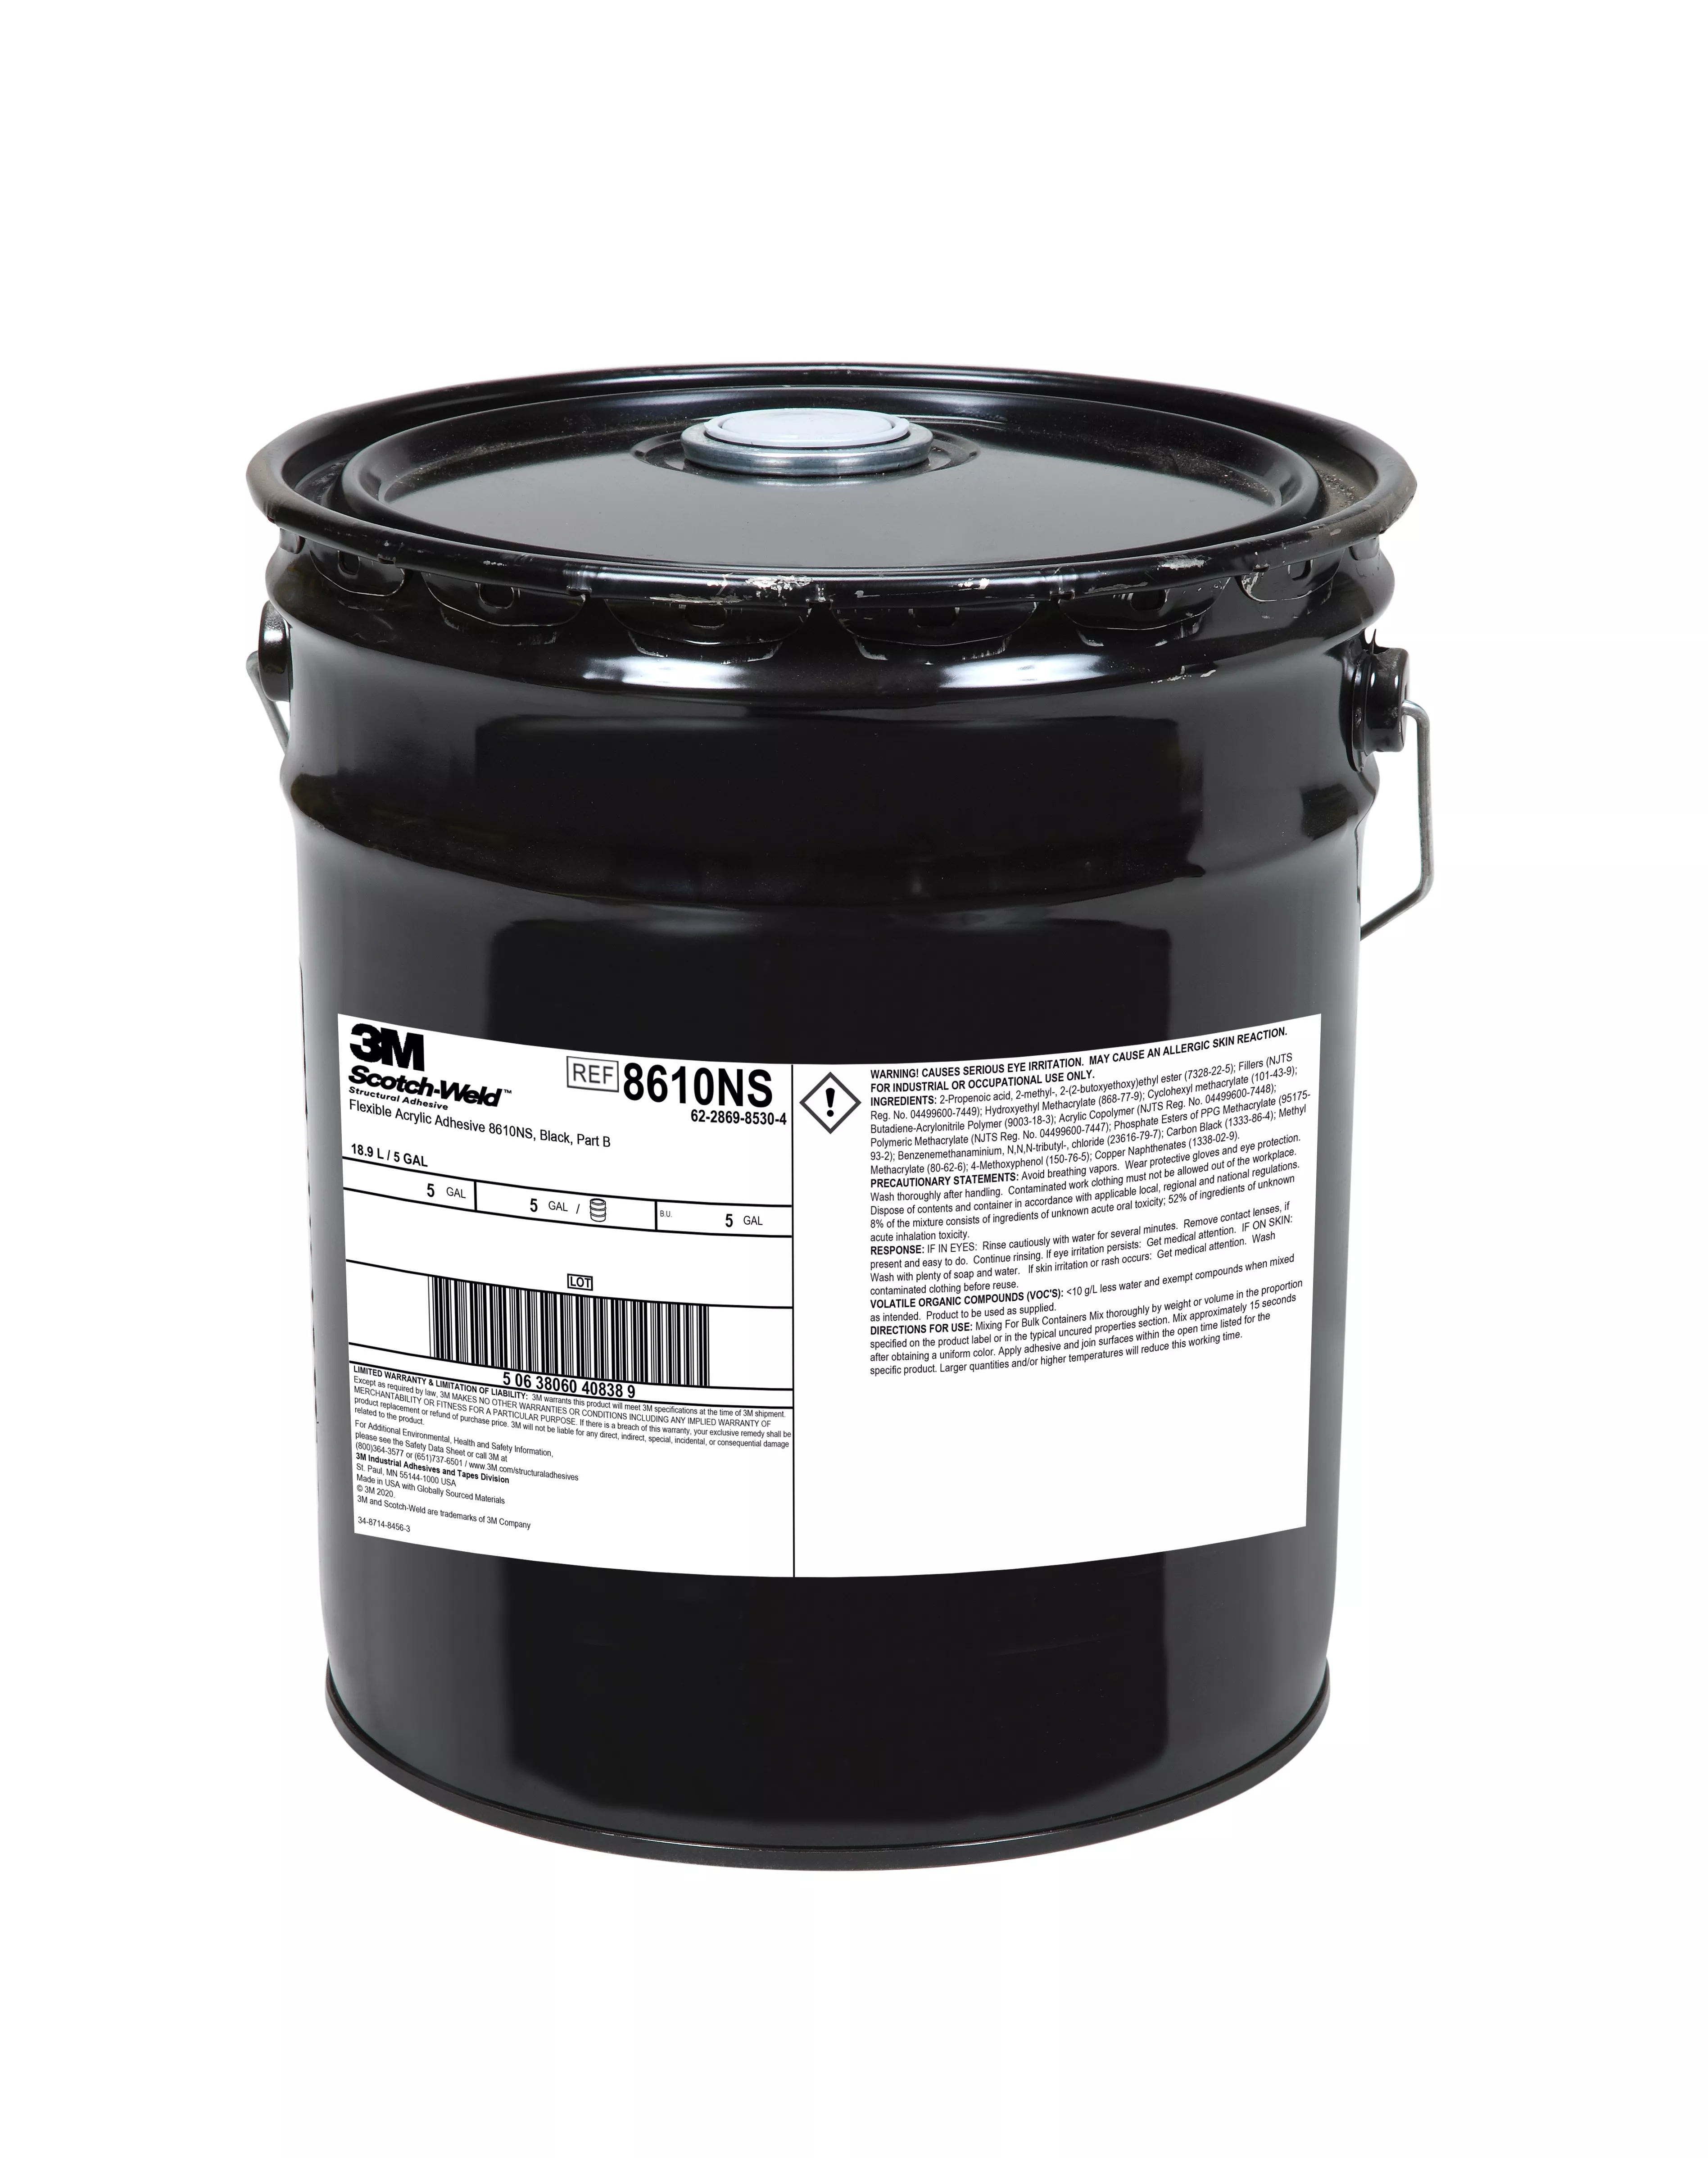 3M™ Scotch-Weld™ Flexible Acrylic Adhesive 8610NS, Black, Part B, 5
Gallon (Pail), Drum